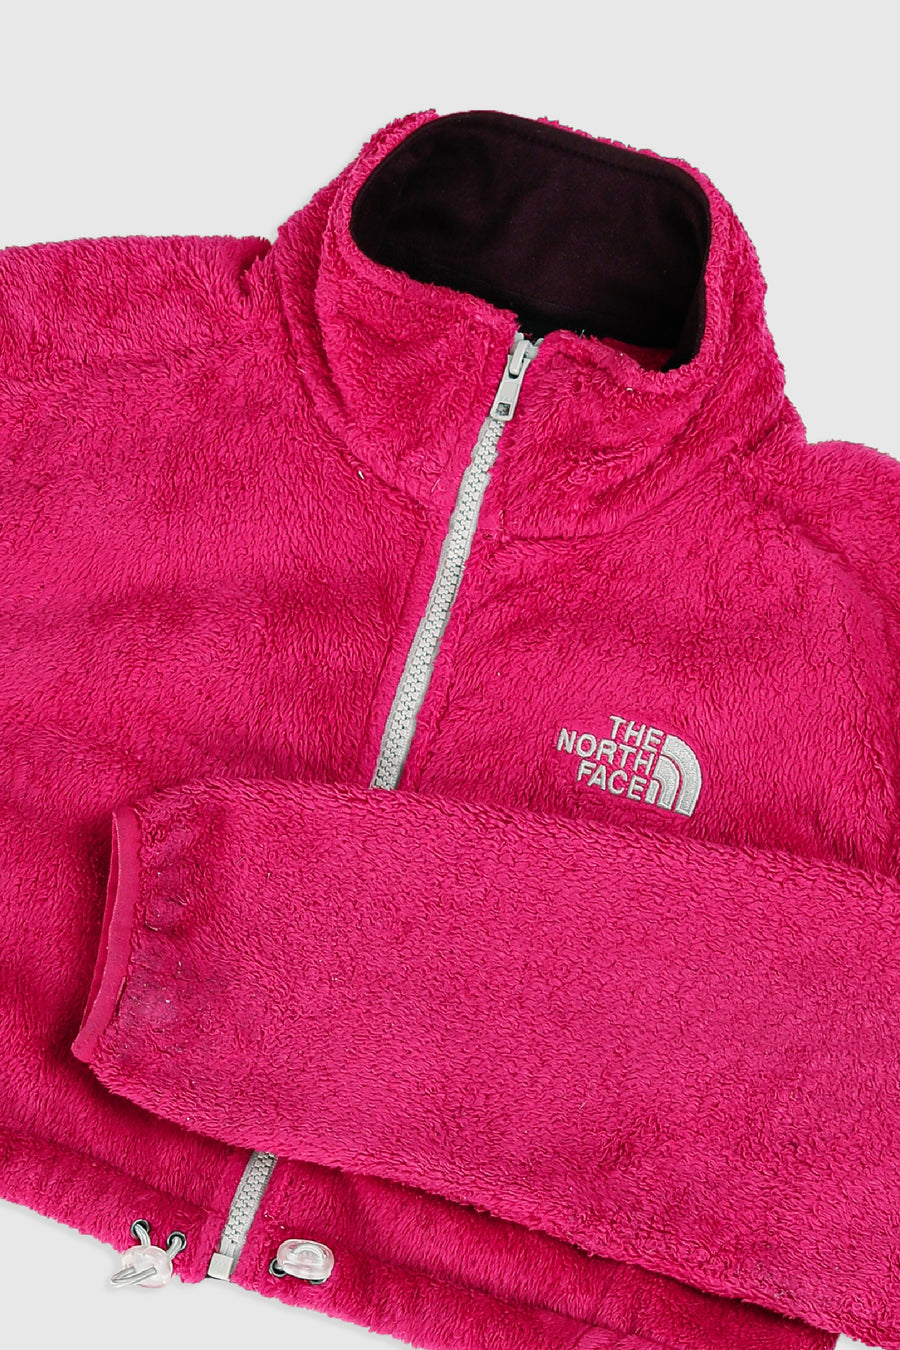 Rework North Face Crop Fleece Jacket - XS, S, M, L, XL